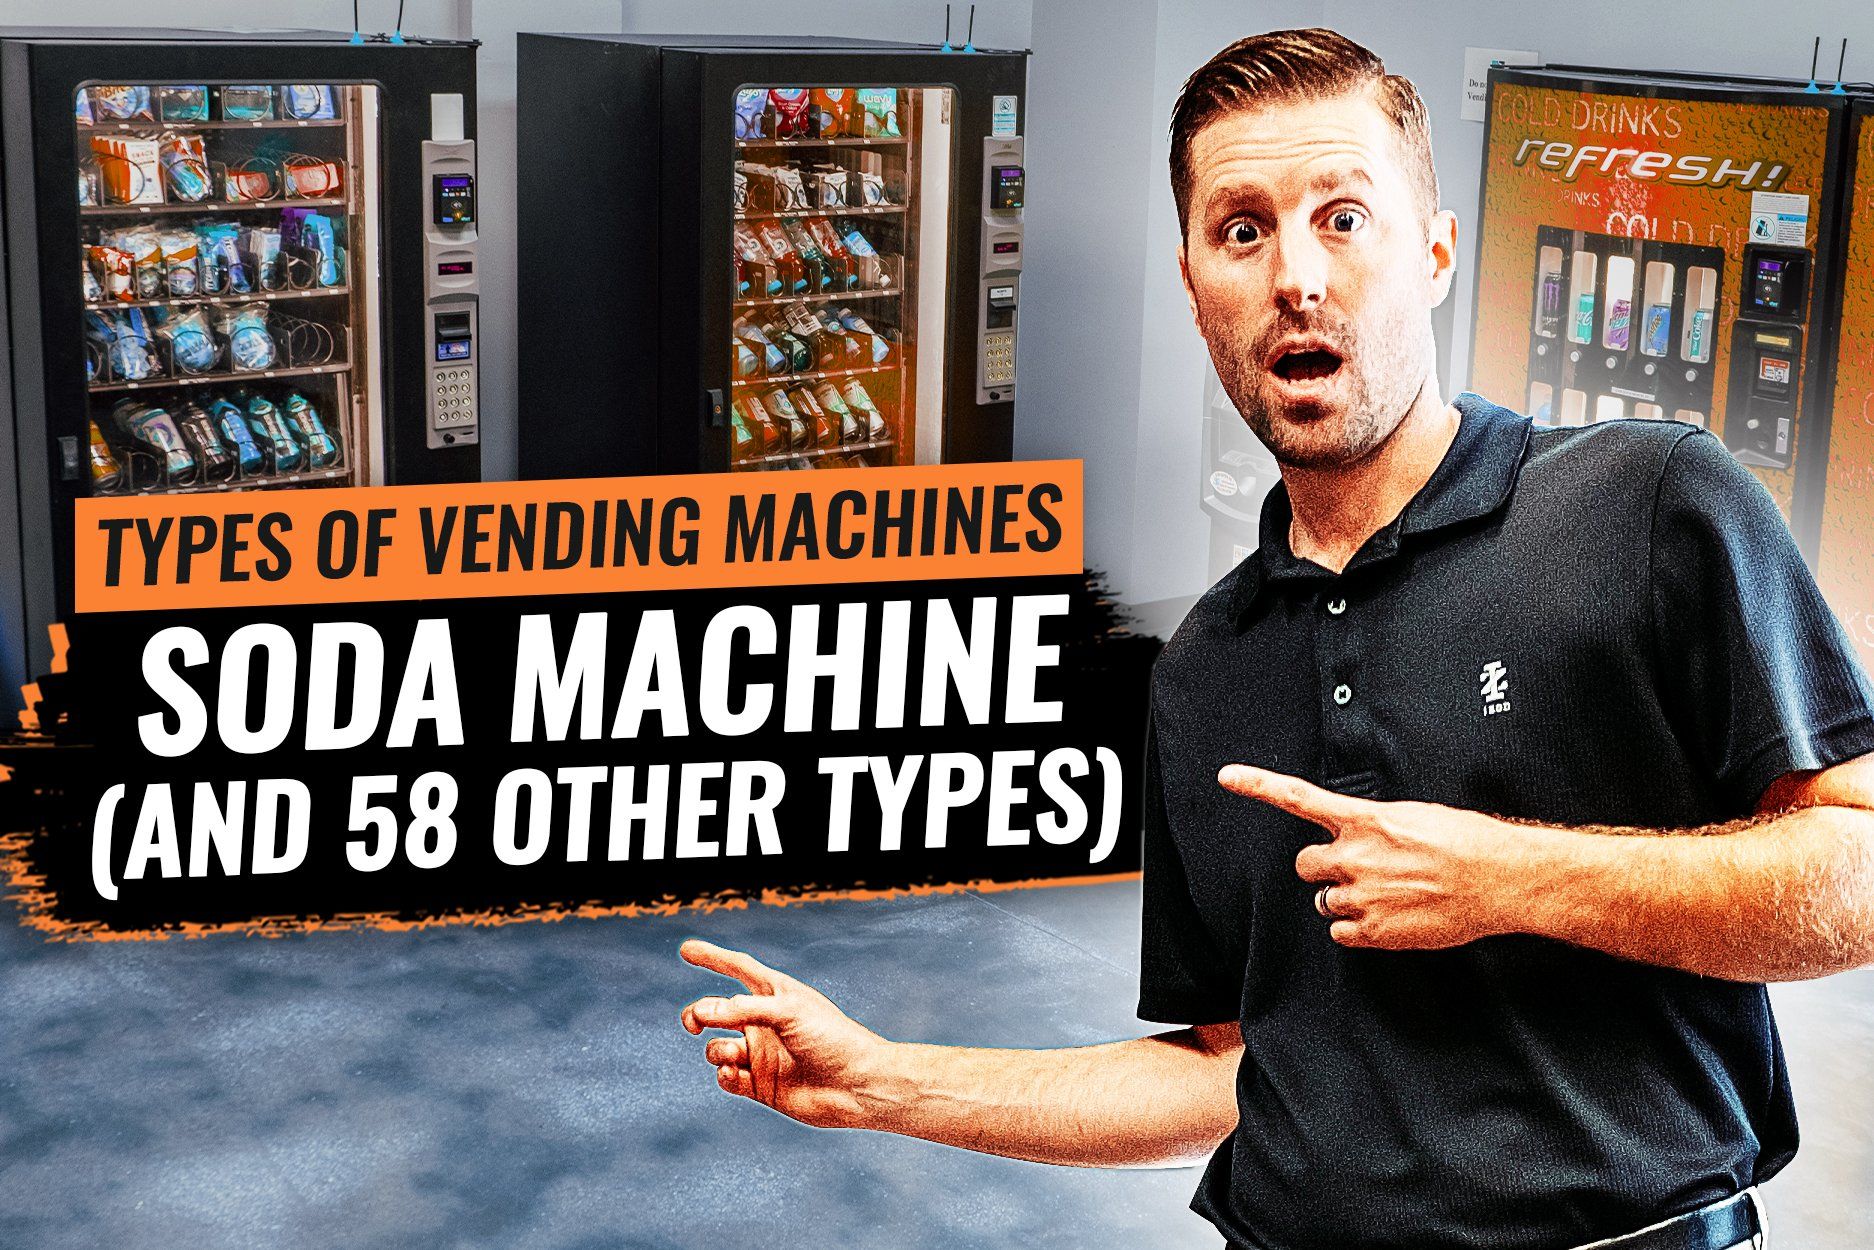 https://c5ab8b64.flyingcdn.com/wp-content/uploads/2023/01/Types-of-vending-machines-1.jpg